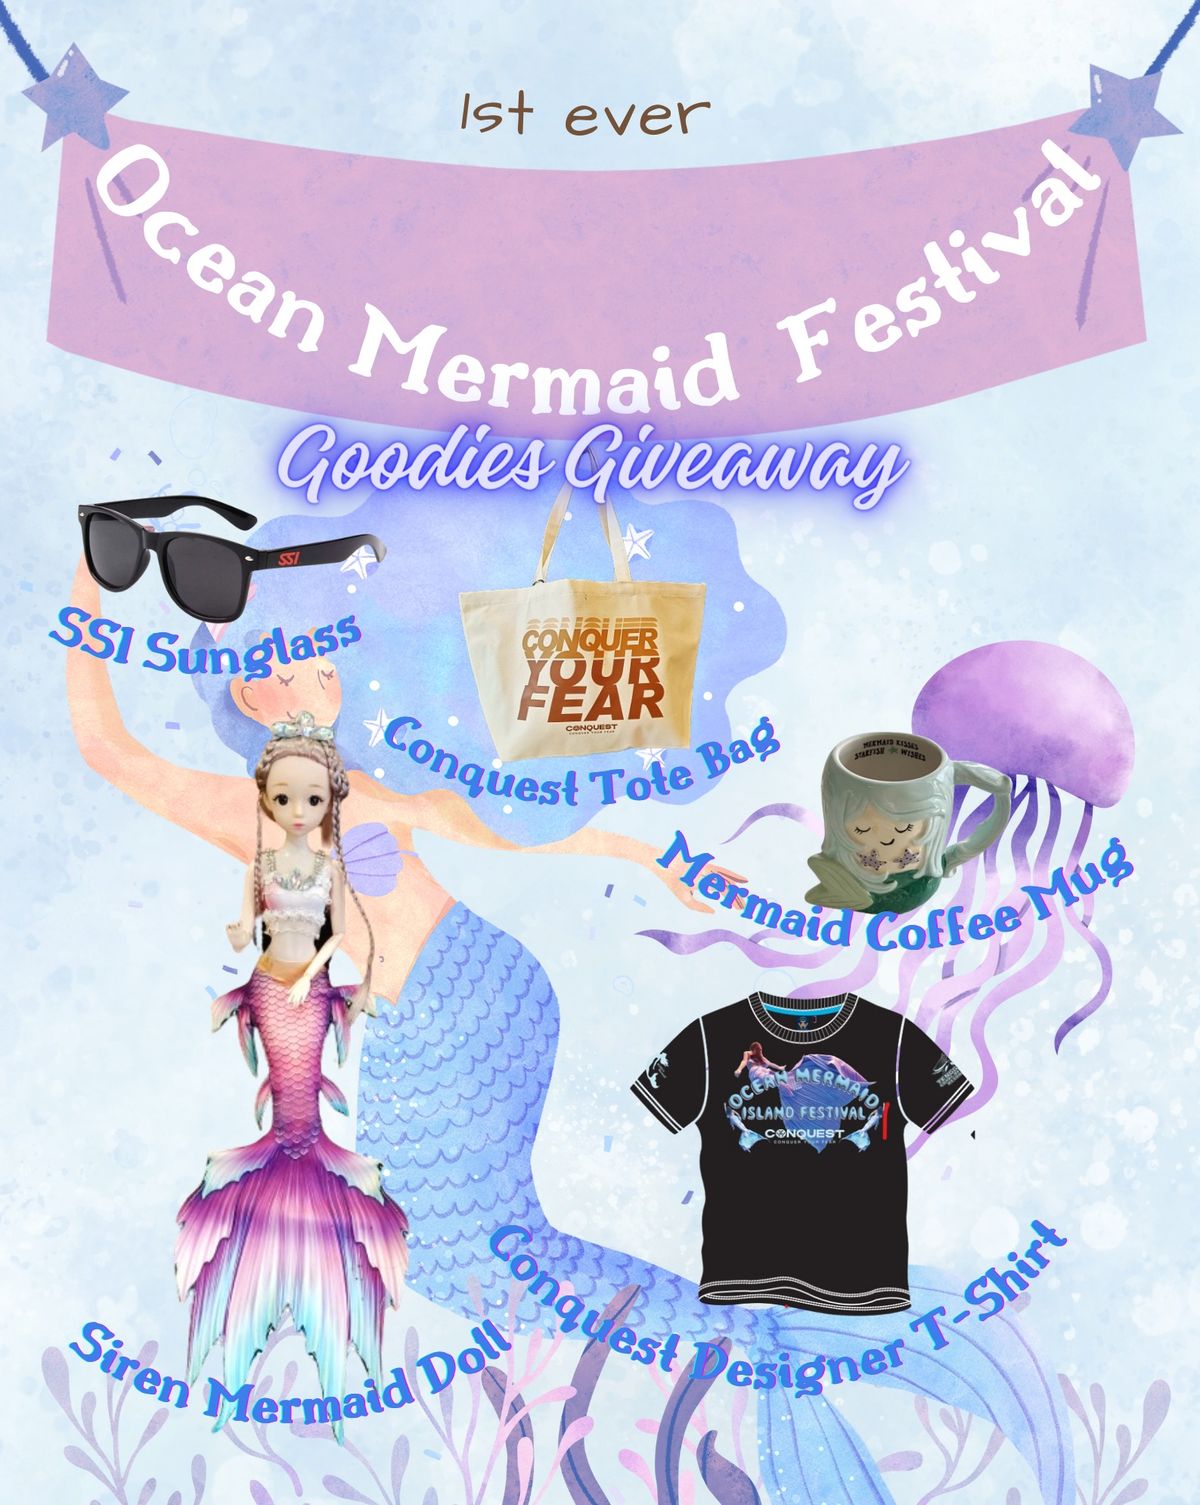 Ocean Mermaid Island Festival